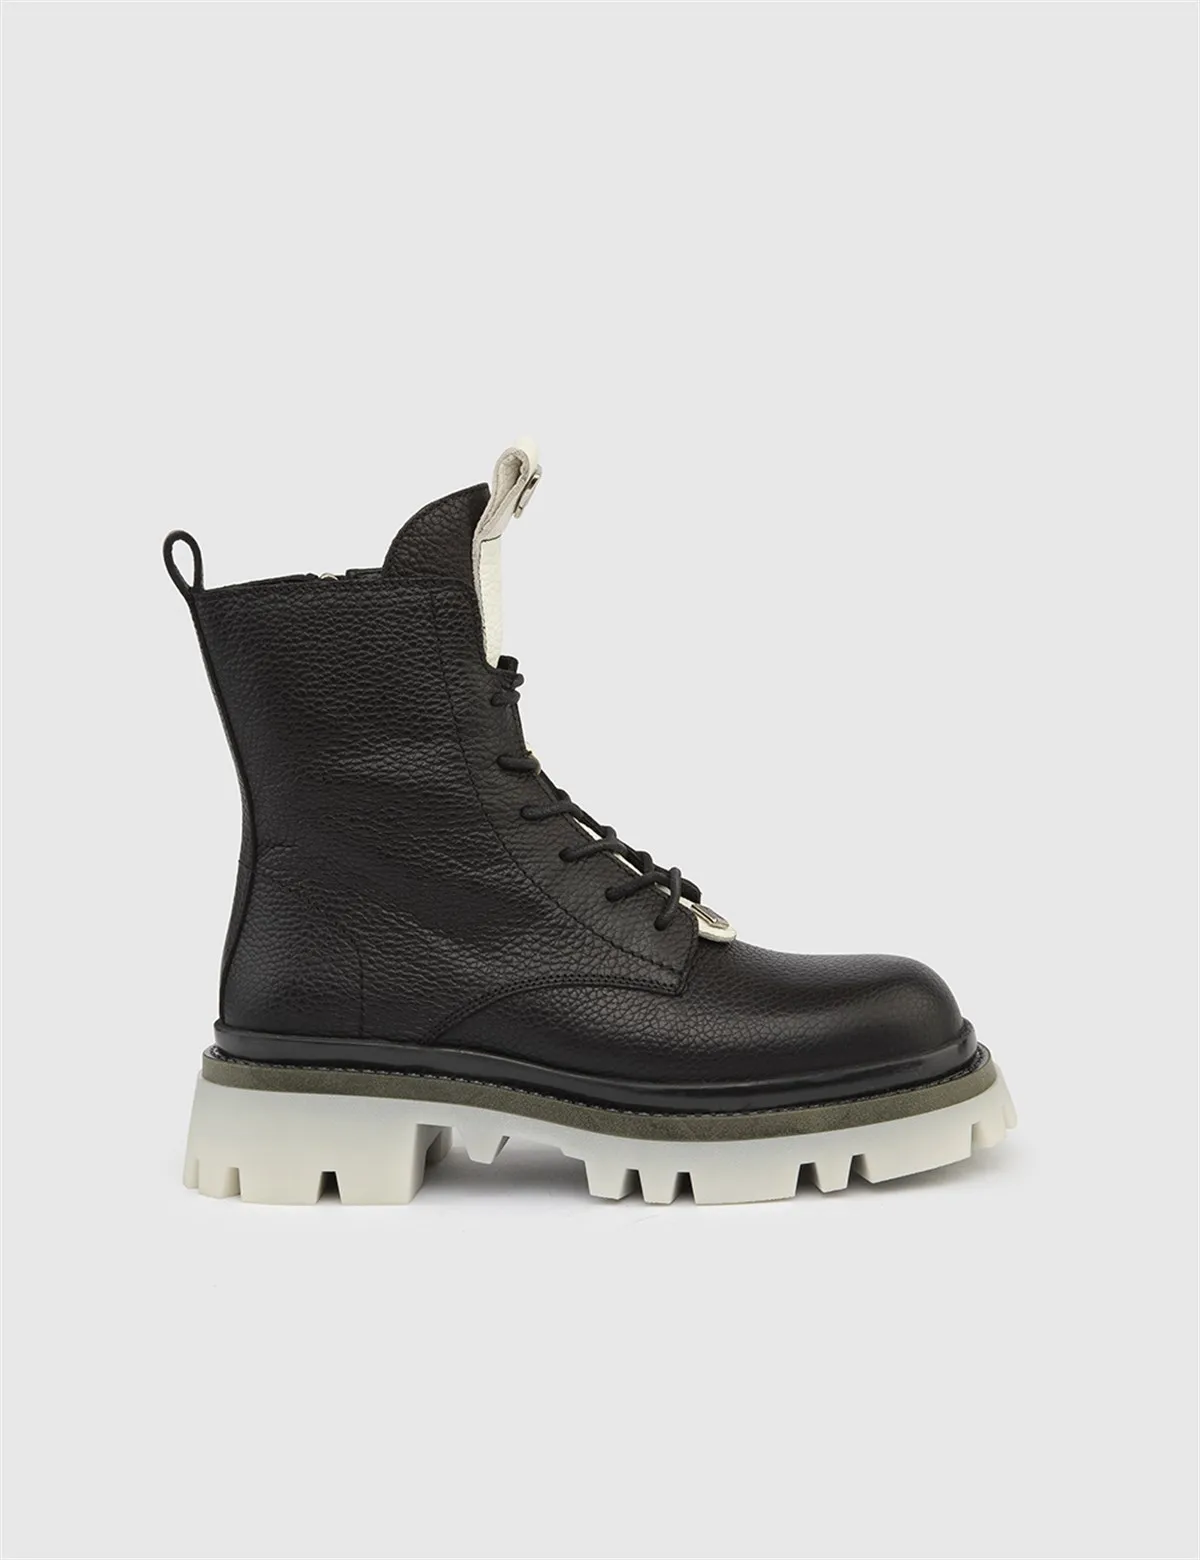 

ILVi-Genuine Leather Handmade Heiko Black Floater Leather Women's Boot Women's Shoes 2022 Fall/Winter